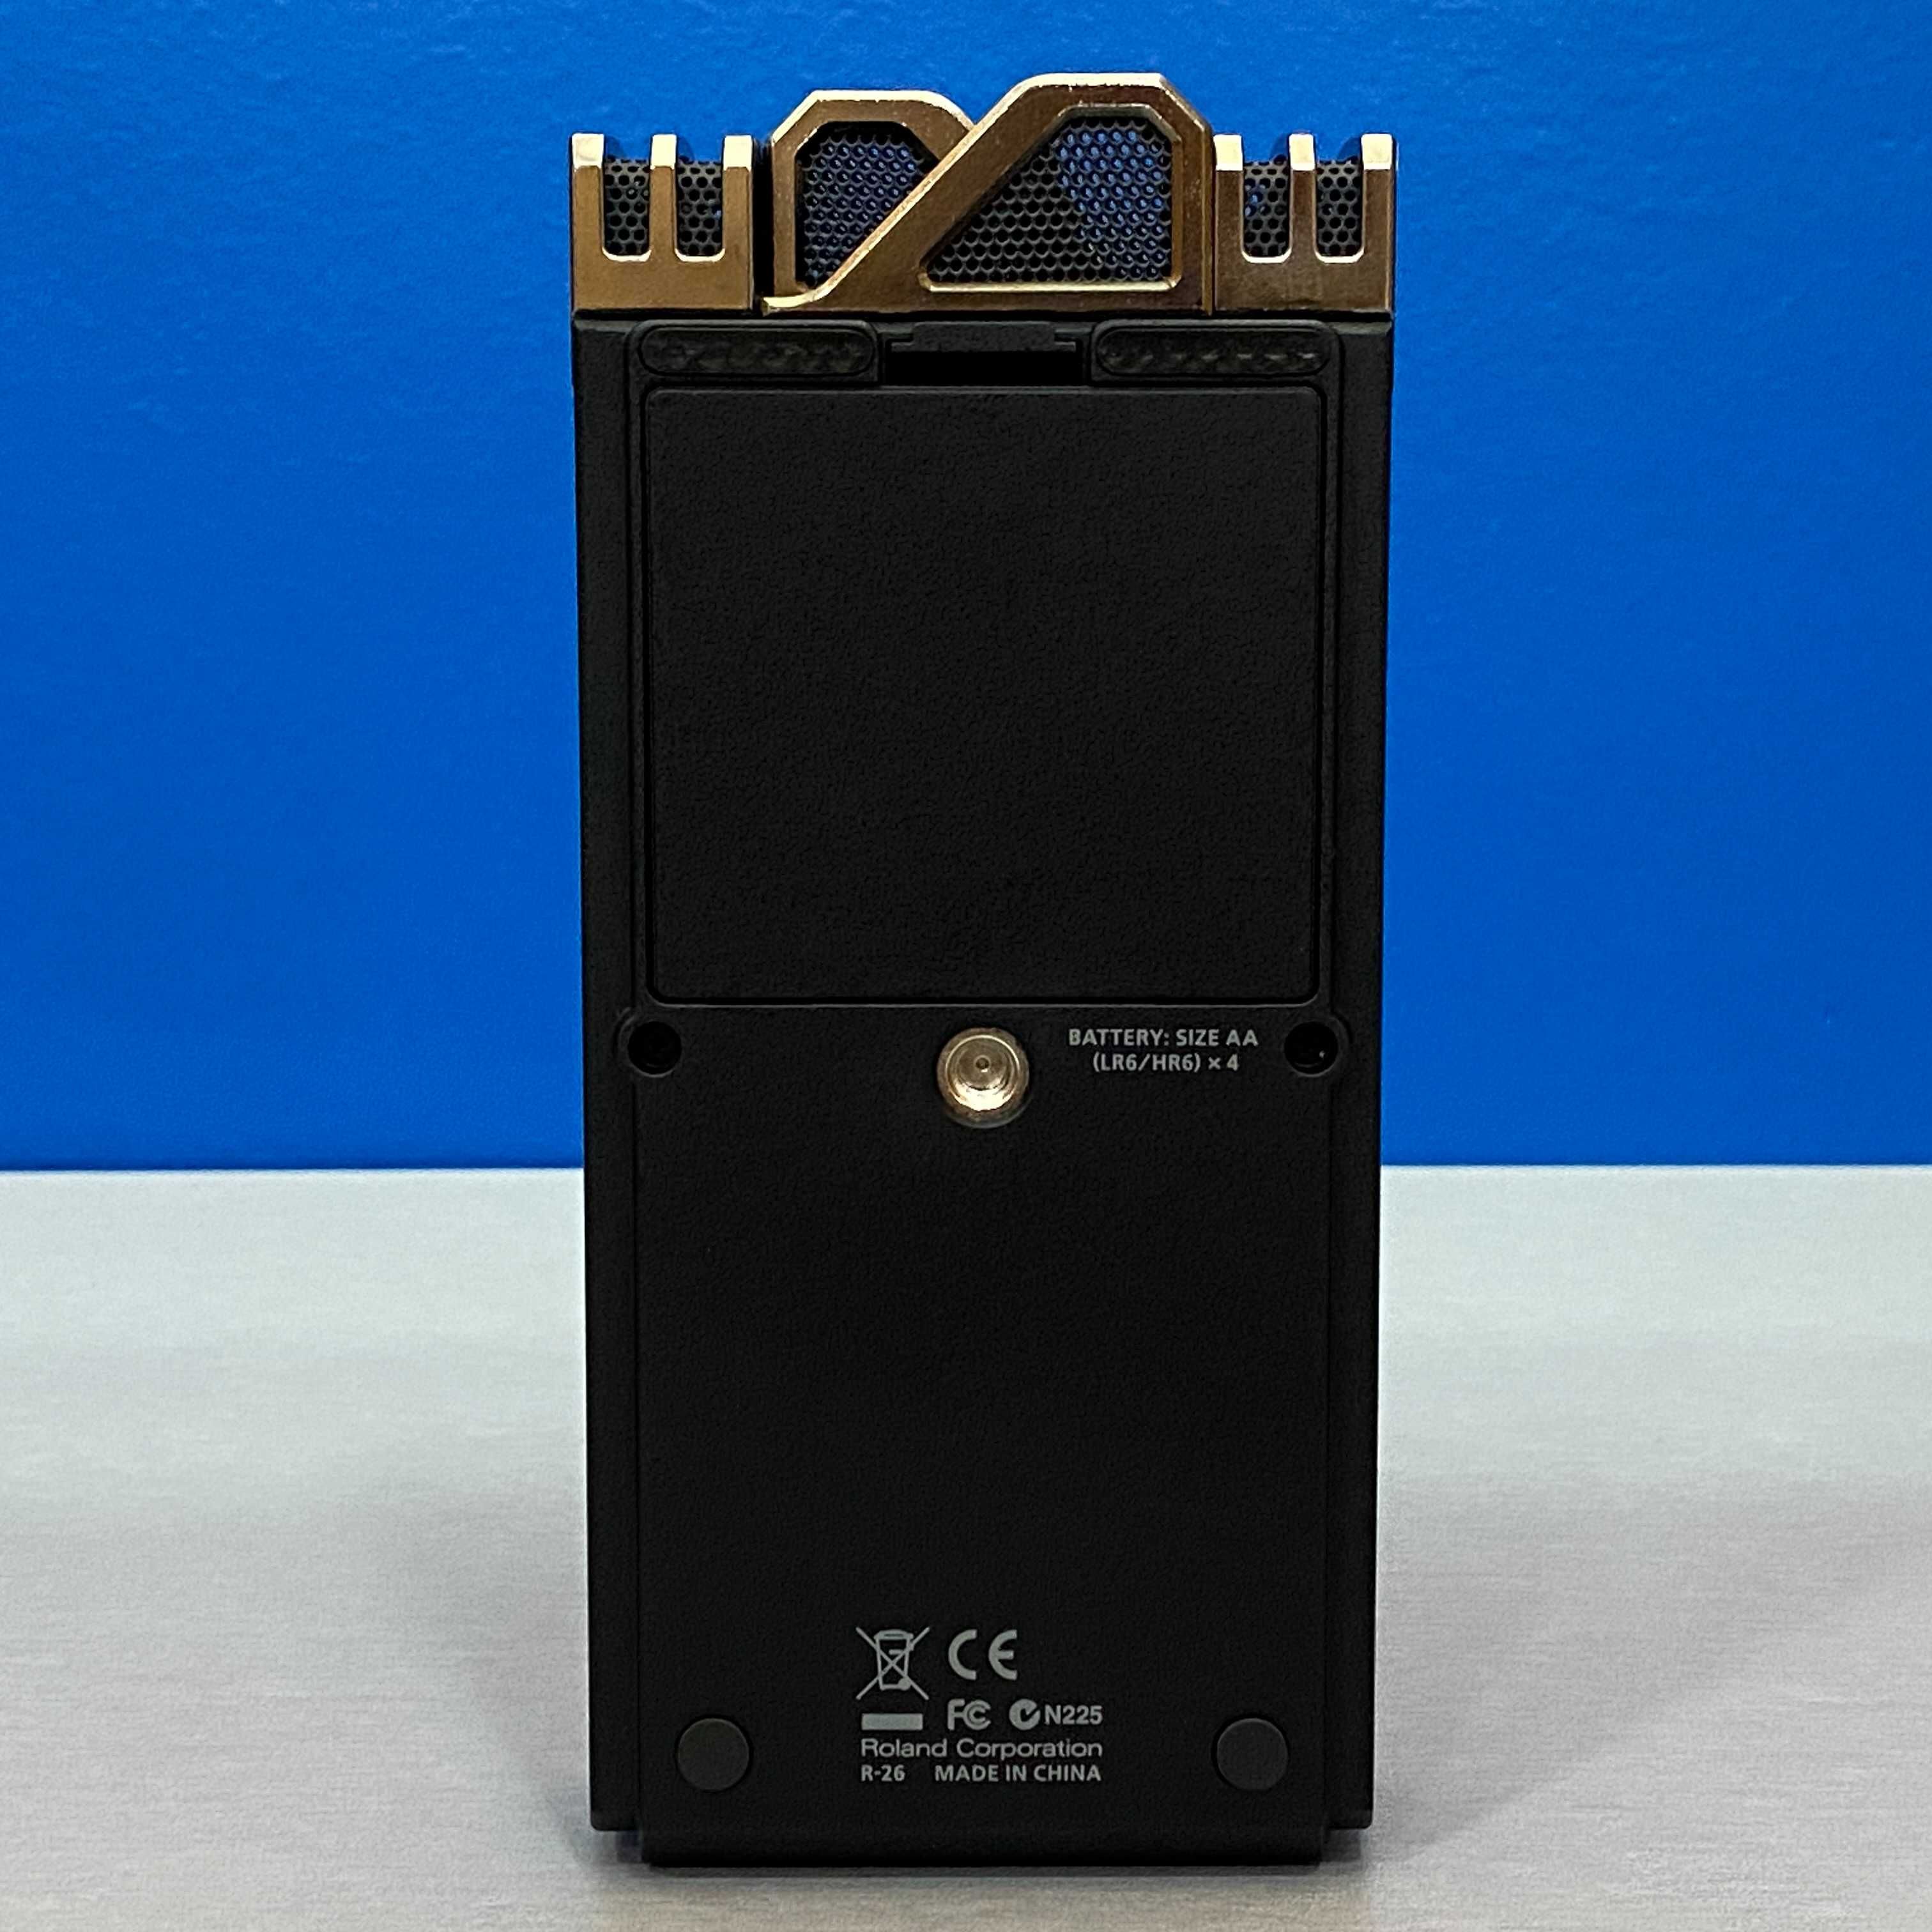 Roland R-26 Portable Recorder (6-Channel)